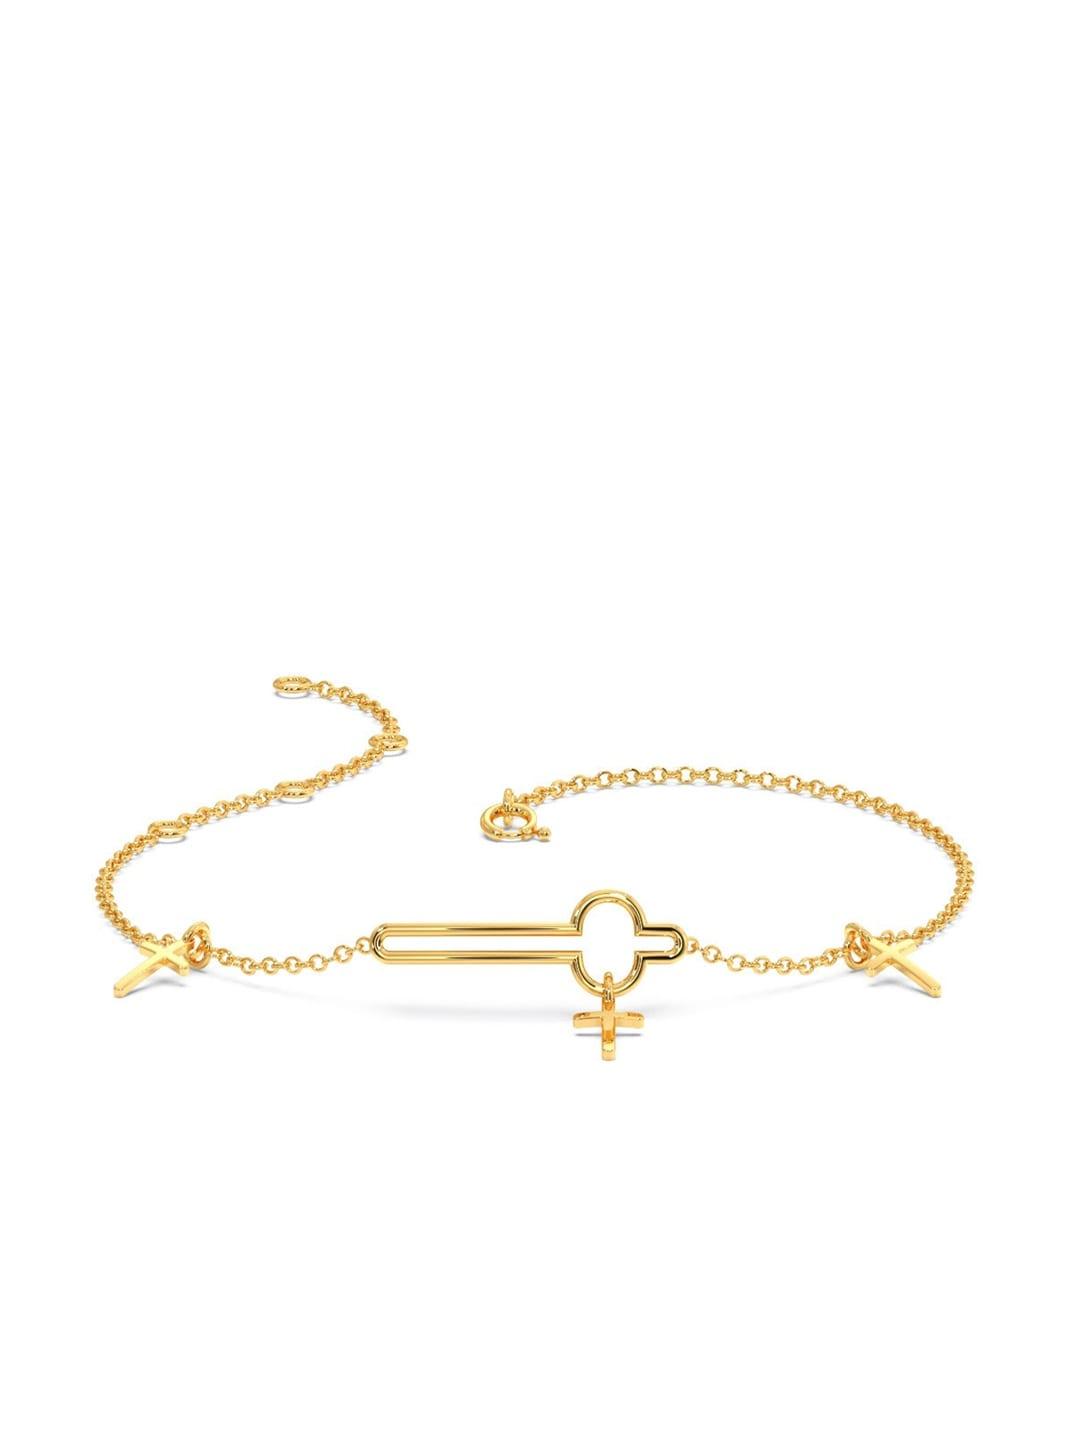 candere a kalyan jewellers company 18kt bis hallmark gold bracelet-1.61gm